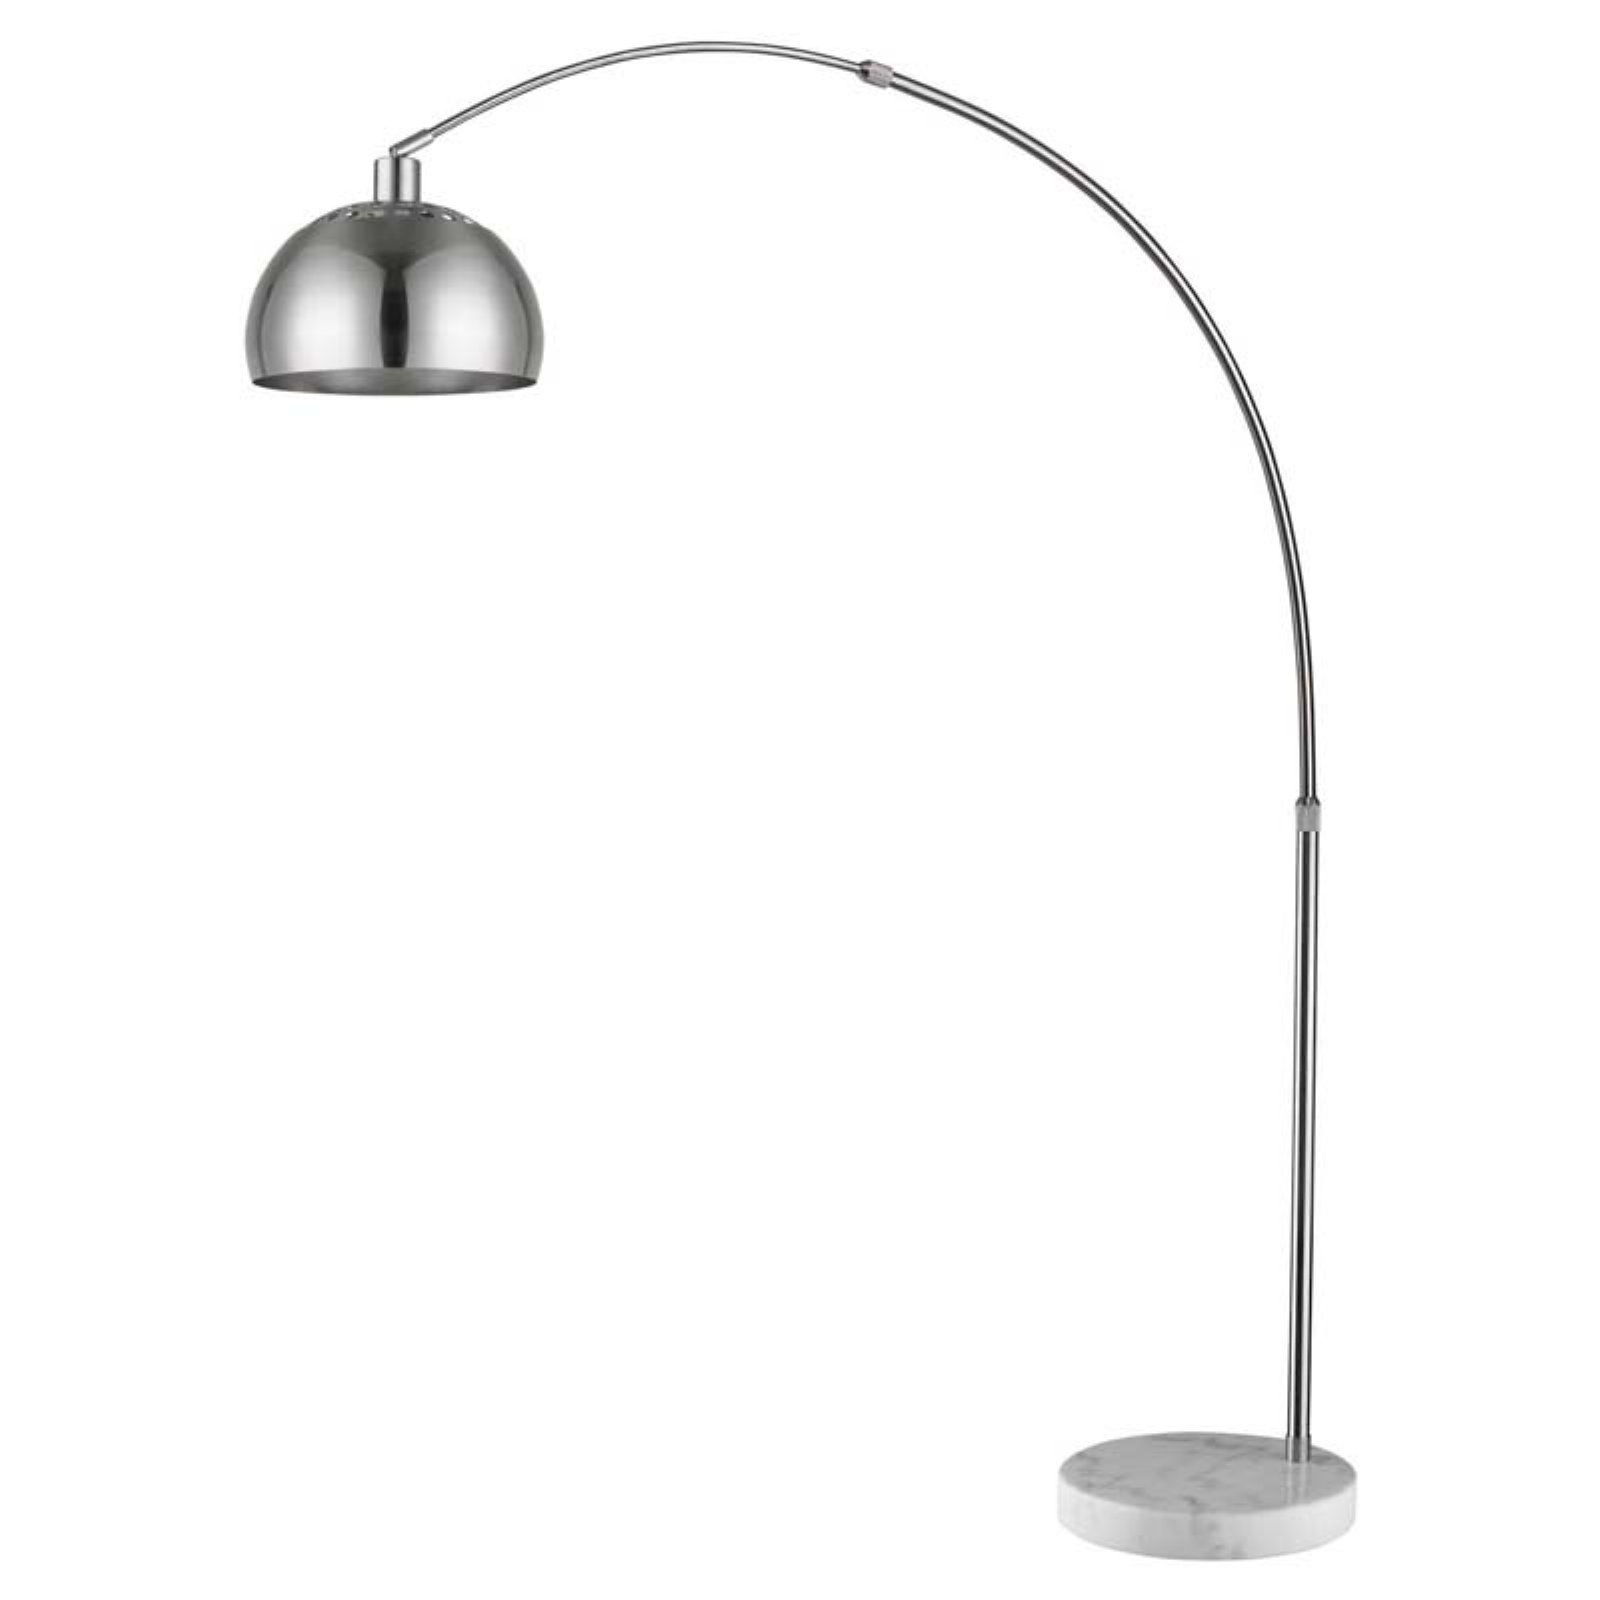 Trend Acclaim Lighting Mid Adjustable Arc Floor Lamp In 2019 regarding dimensions 1600 X 1600